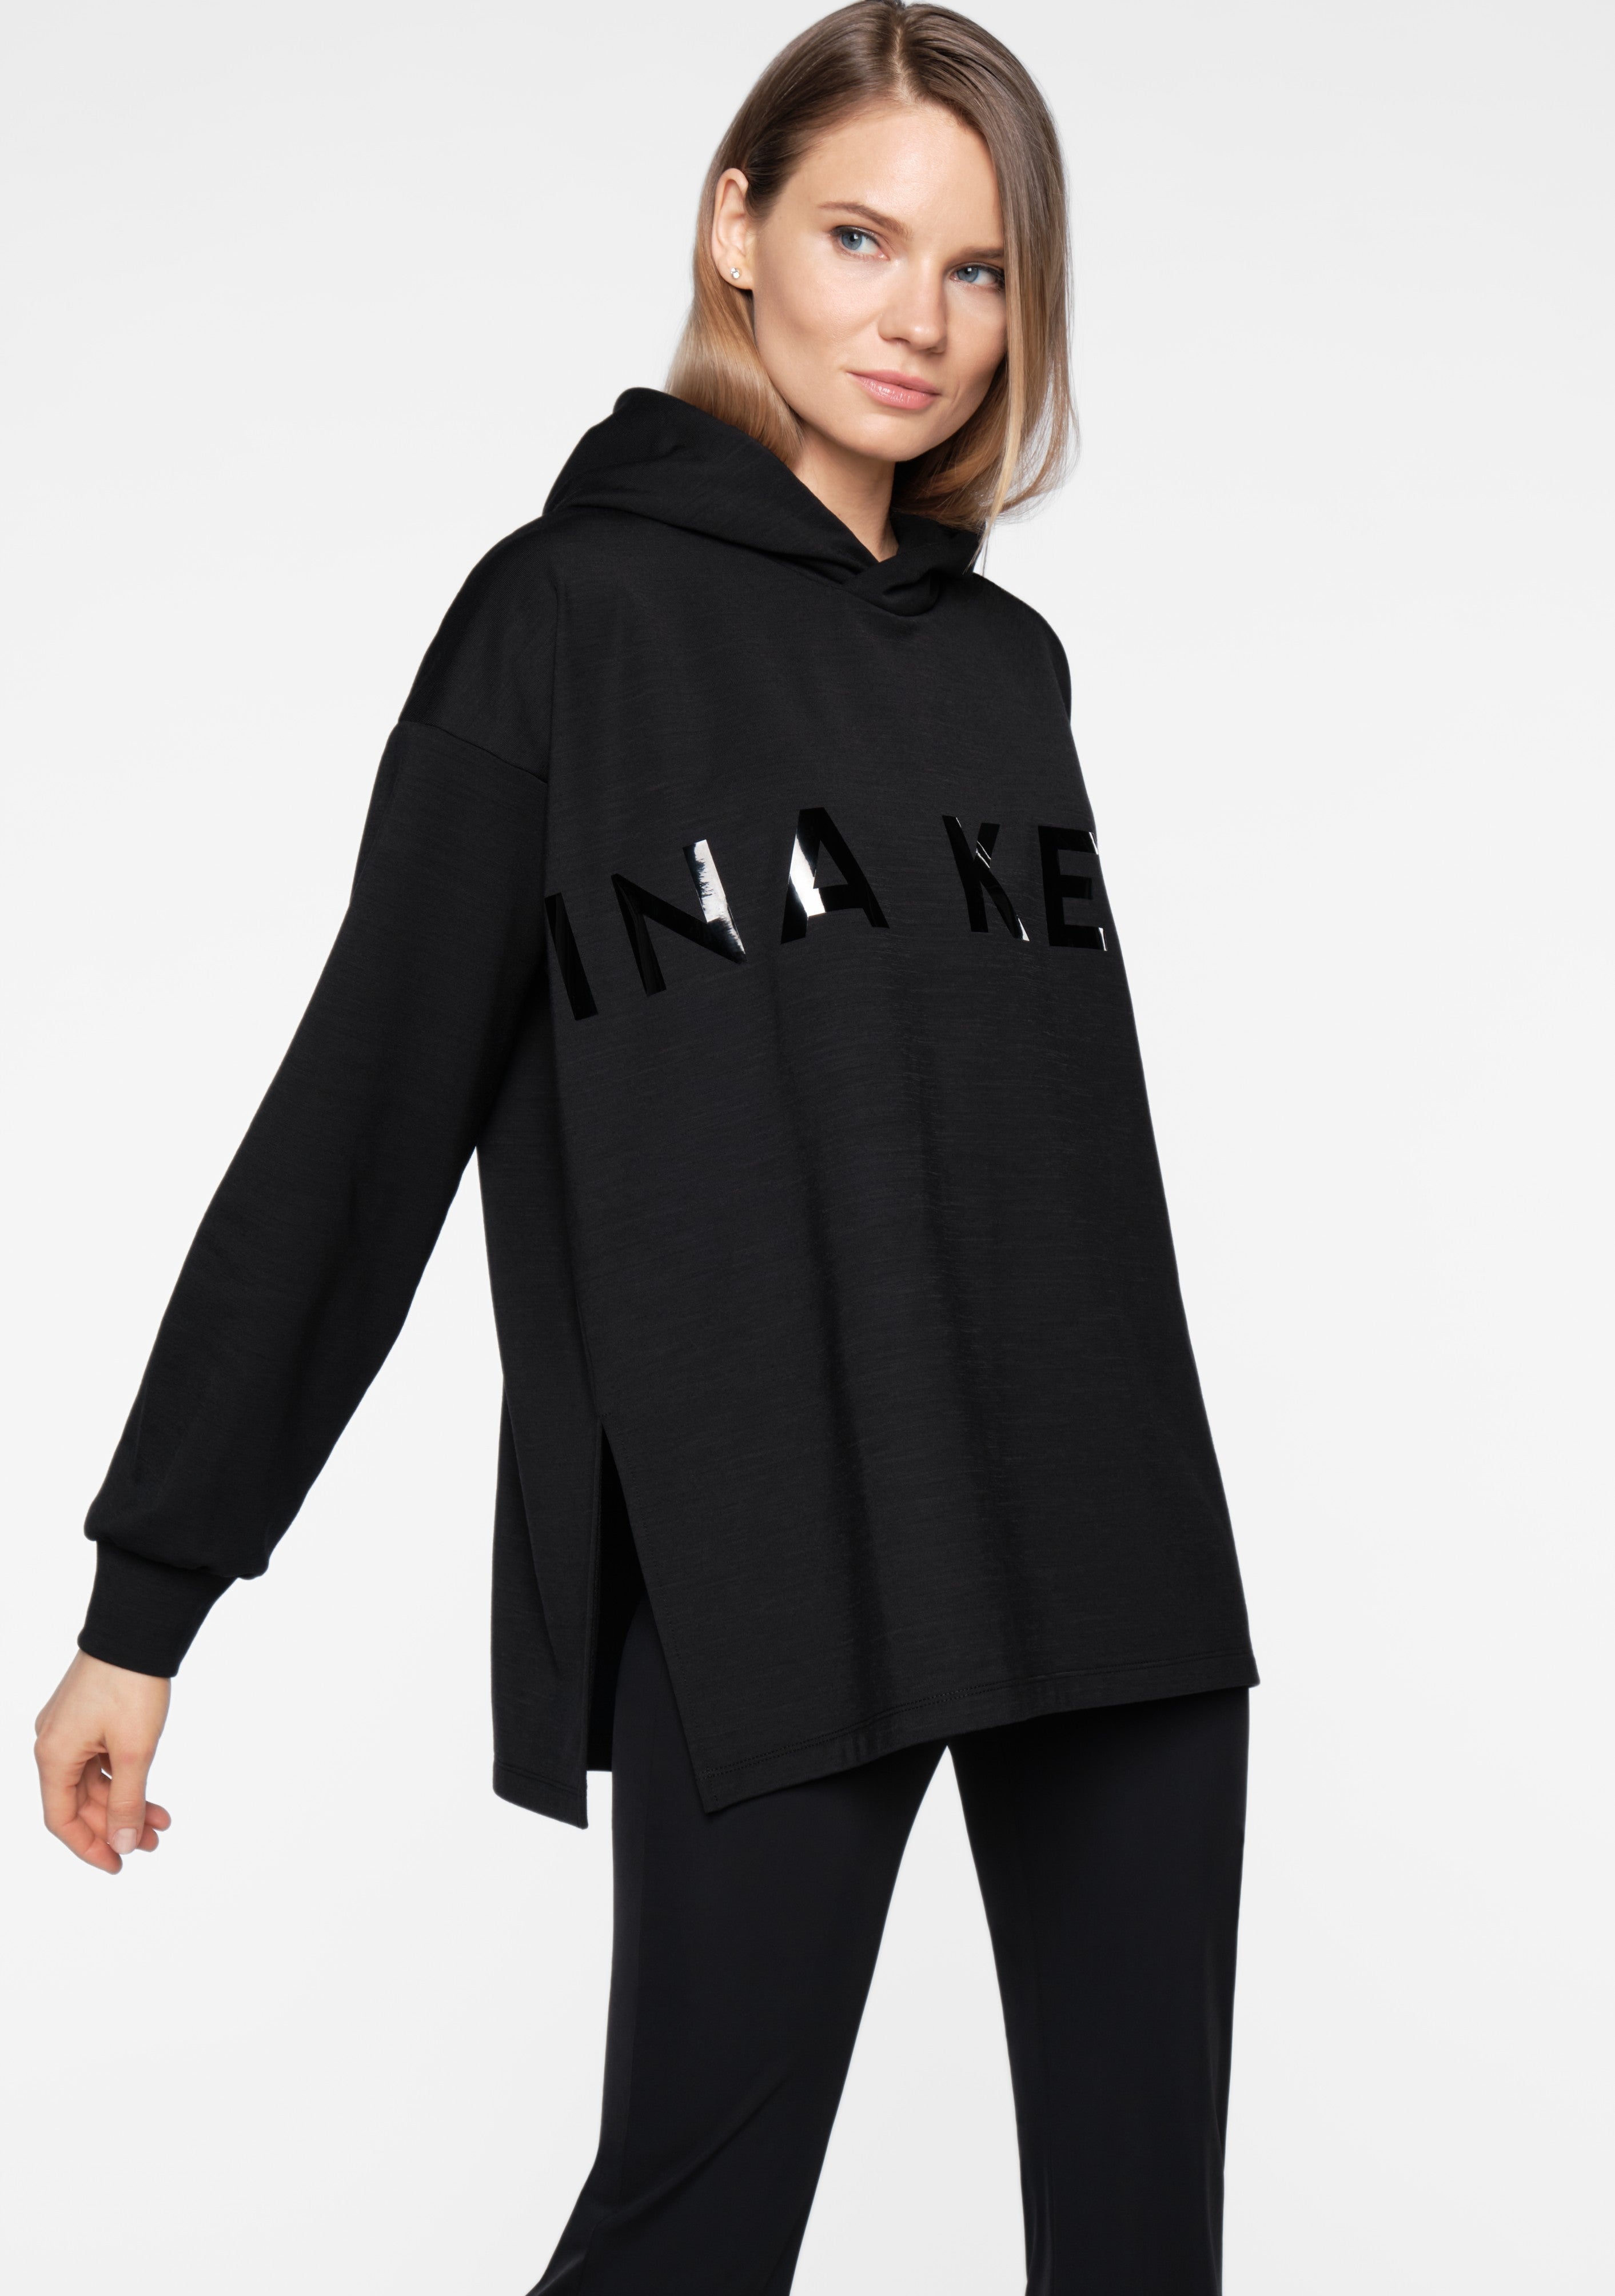 SPIRIT Sweater black - INA KESS International